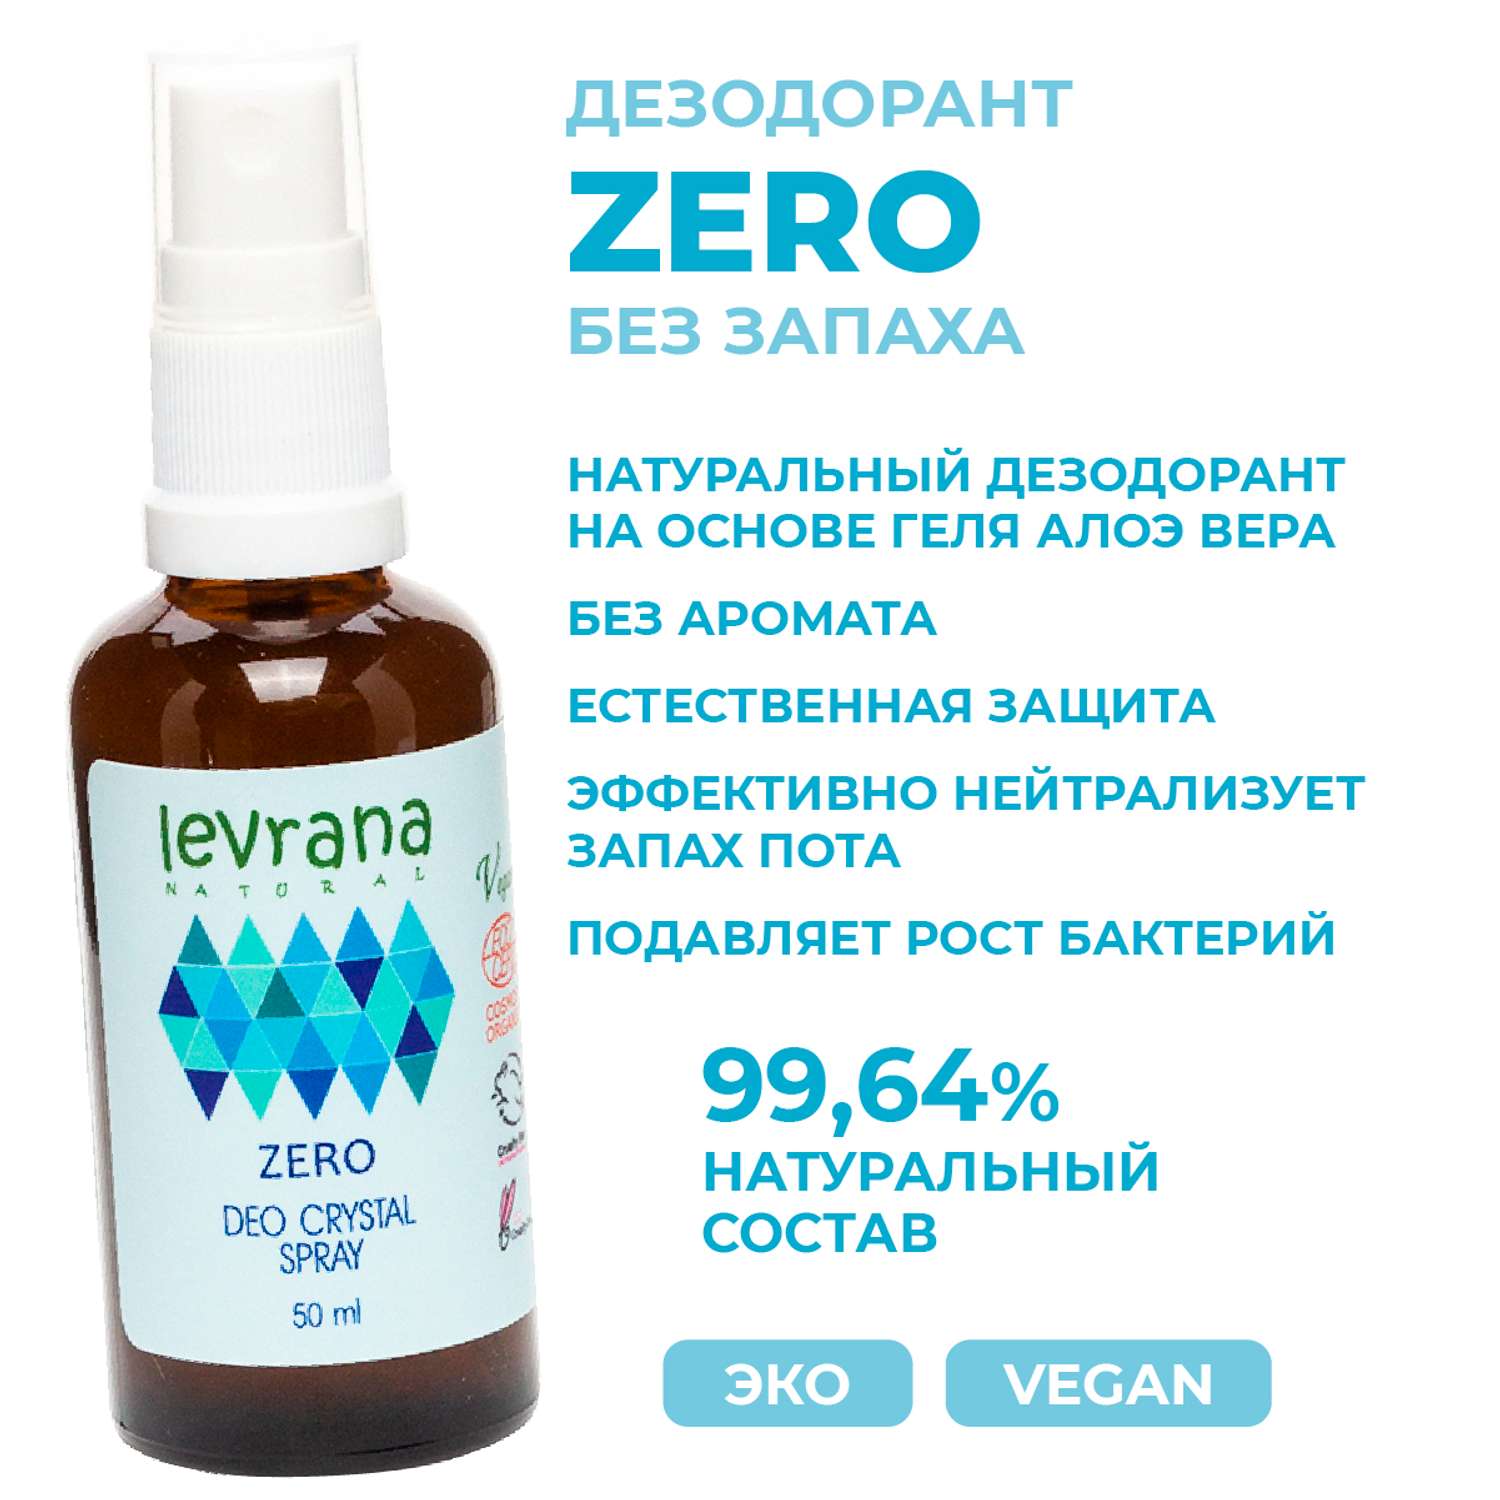 Дезодорант levrana Zero без аромата 50мл - фото 2